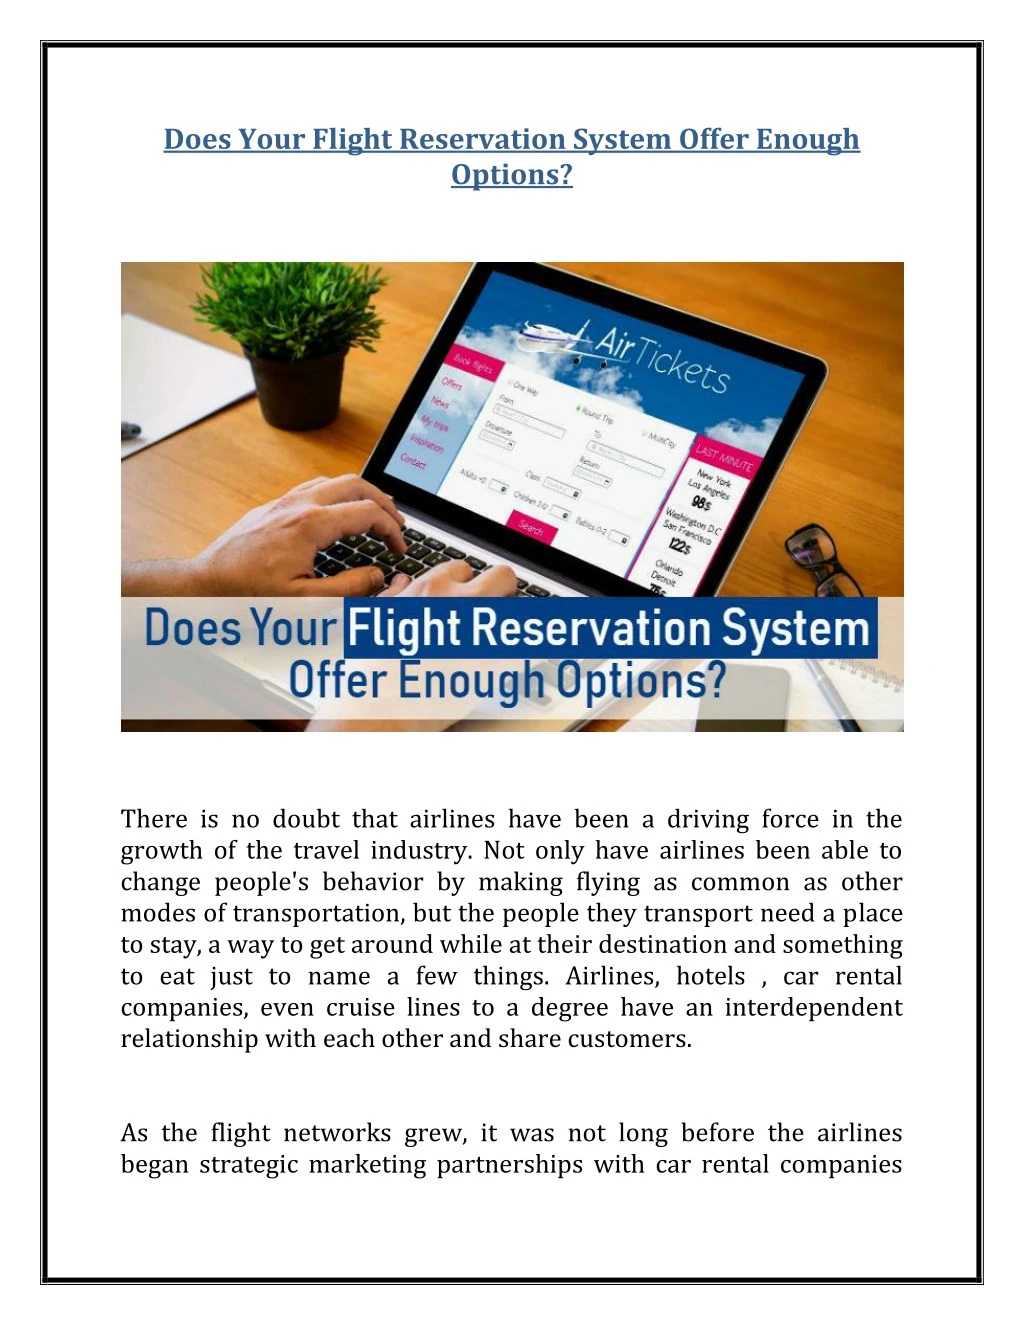 does your flight reservation system offer enough